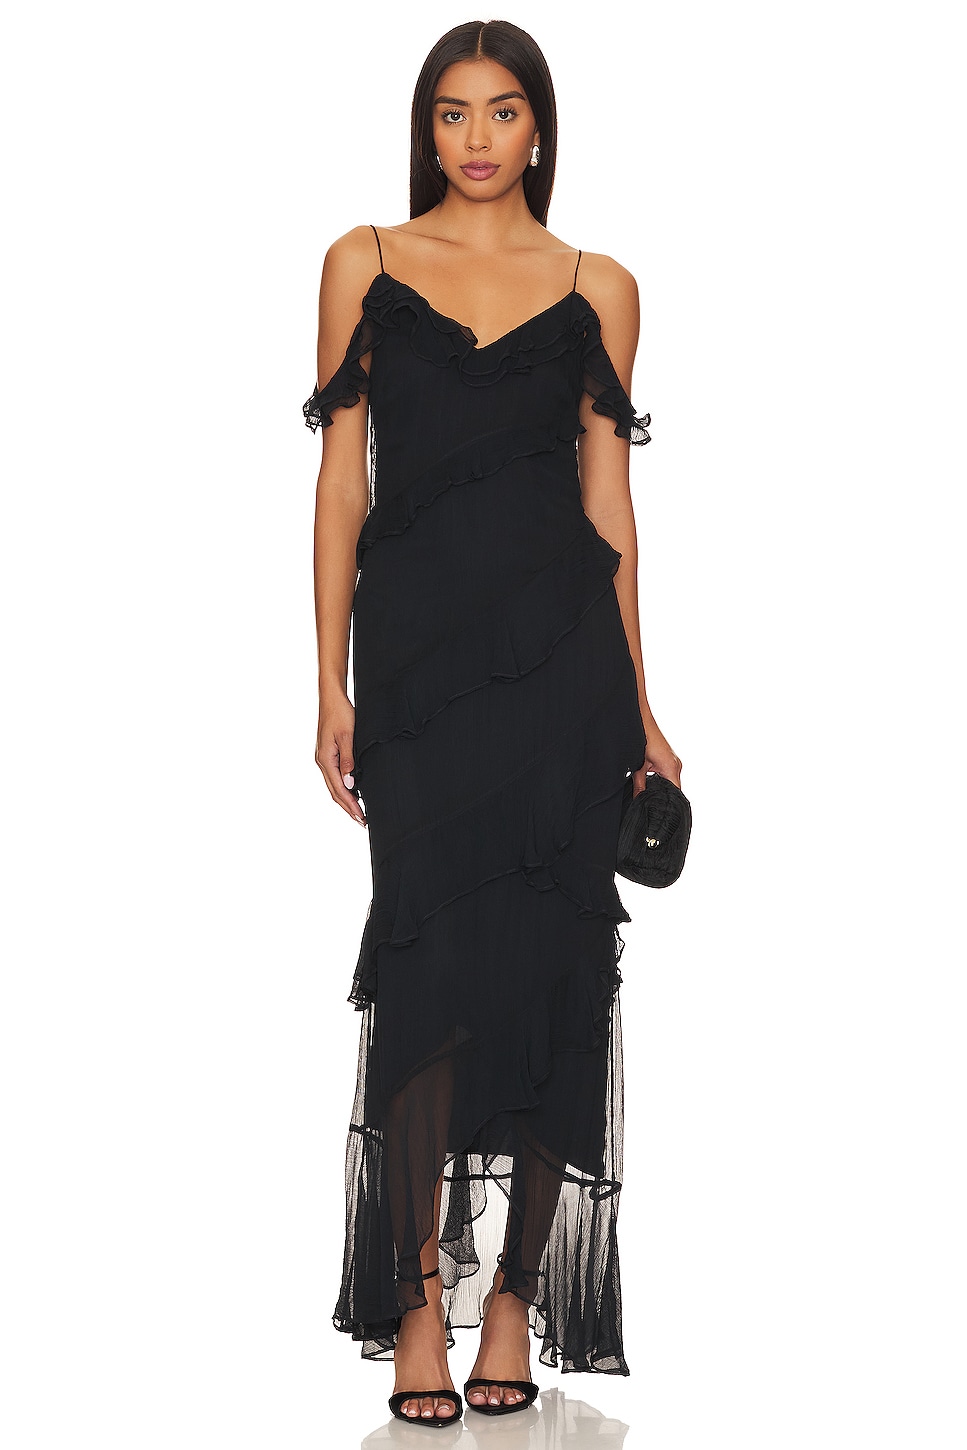 House of Harlow 1960 x REVOLVE Maxime Maxi Dress in Black | REVOLVE